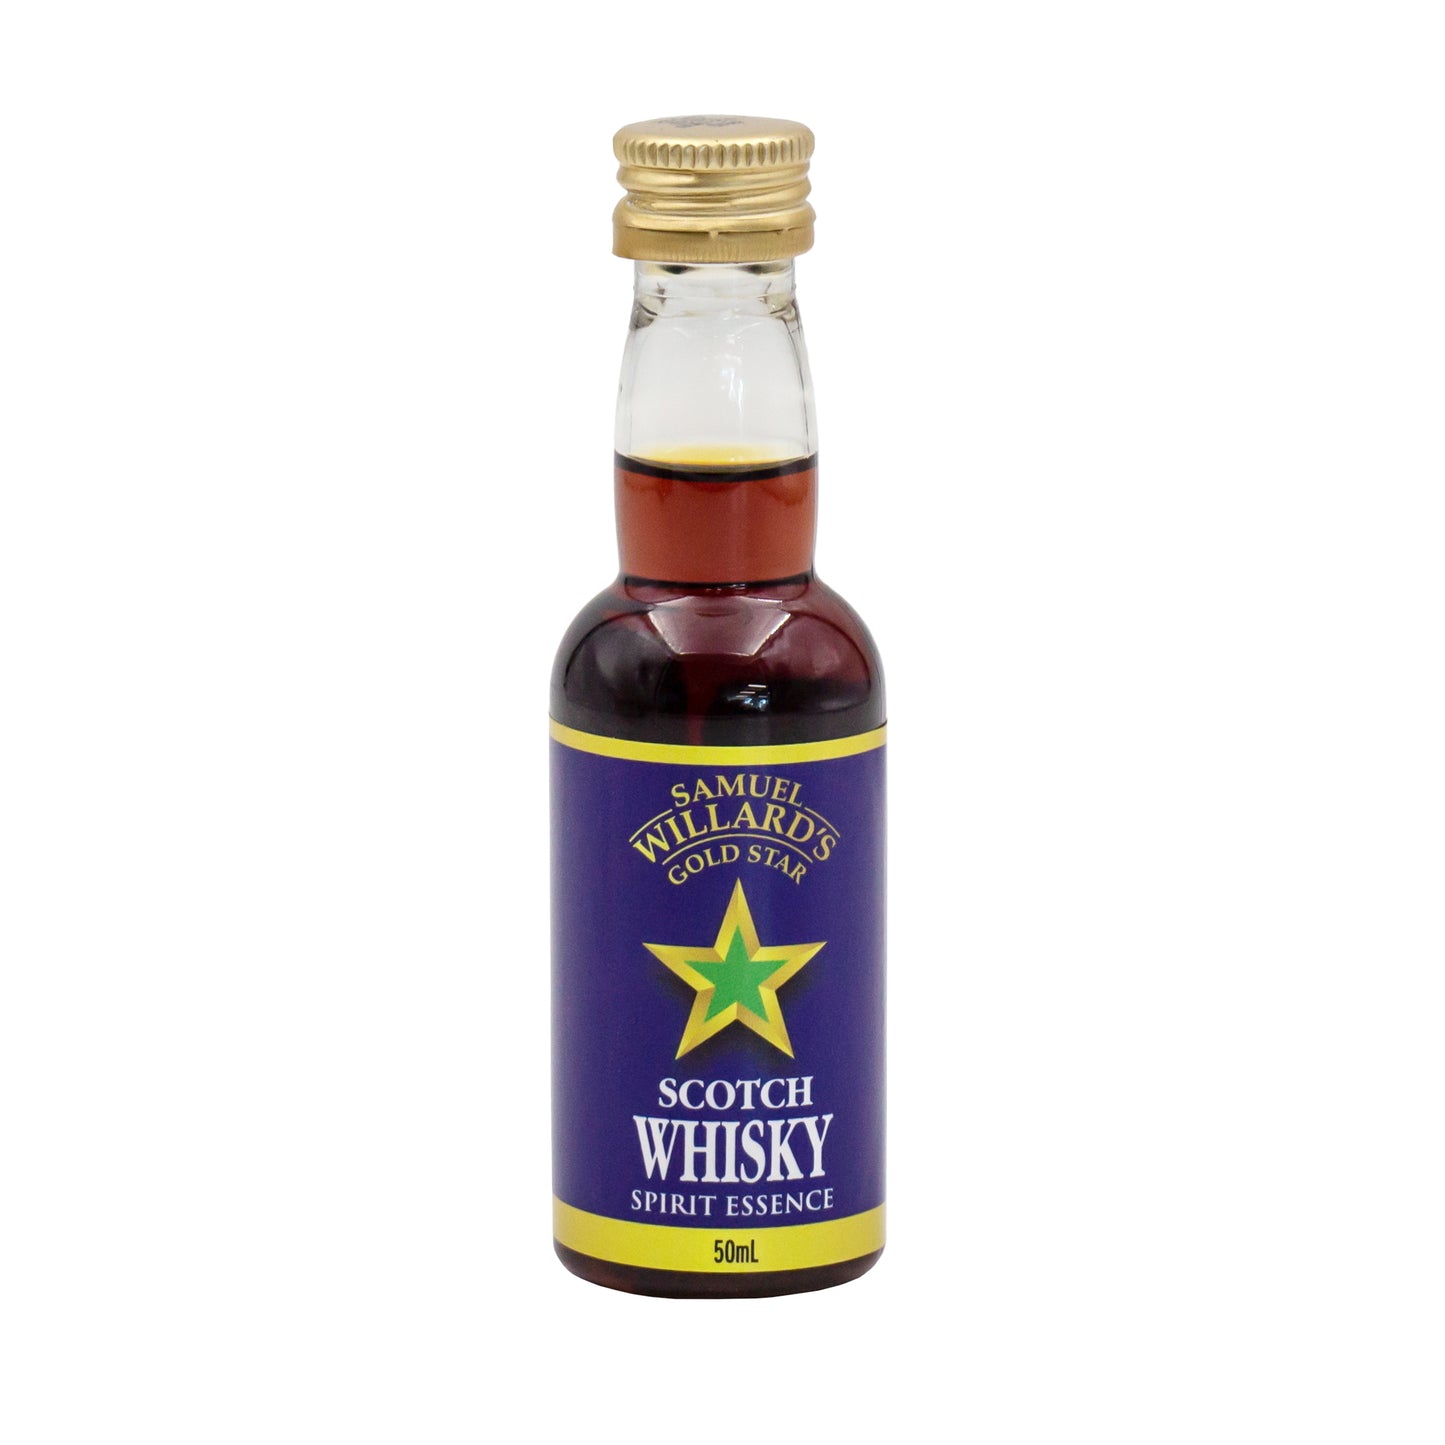 50ml bottle of samuel willards gold star scotch whisky essence